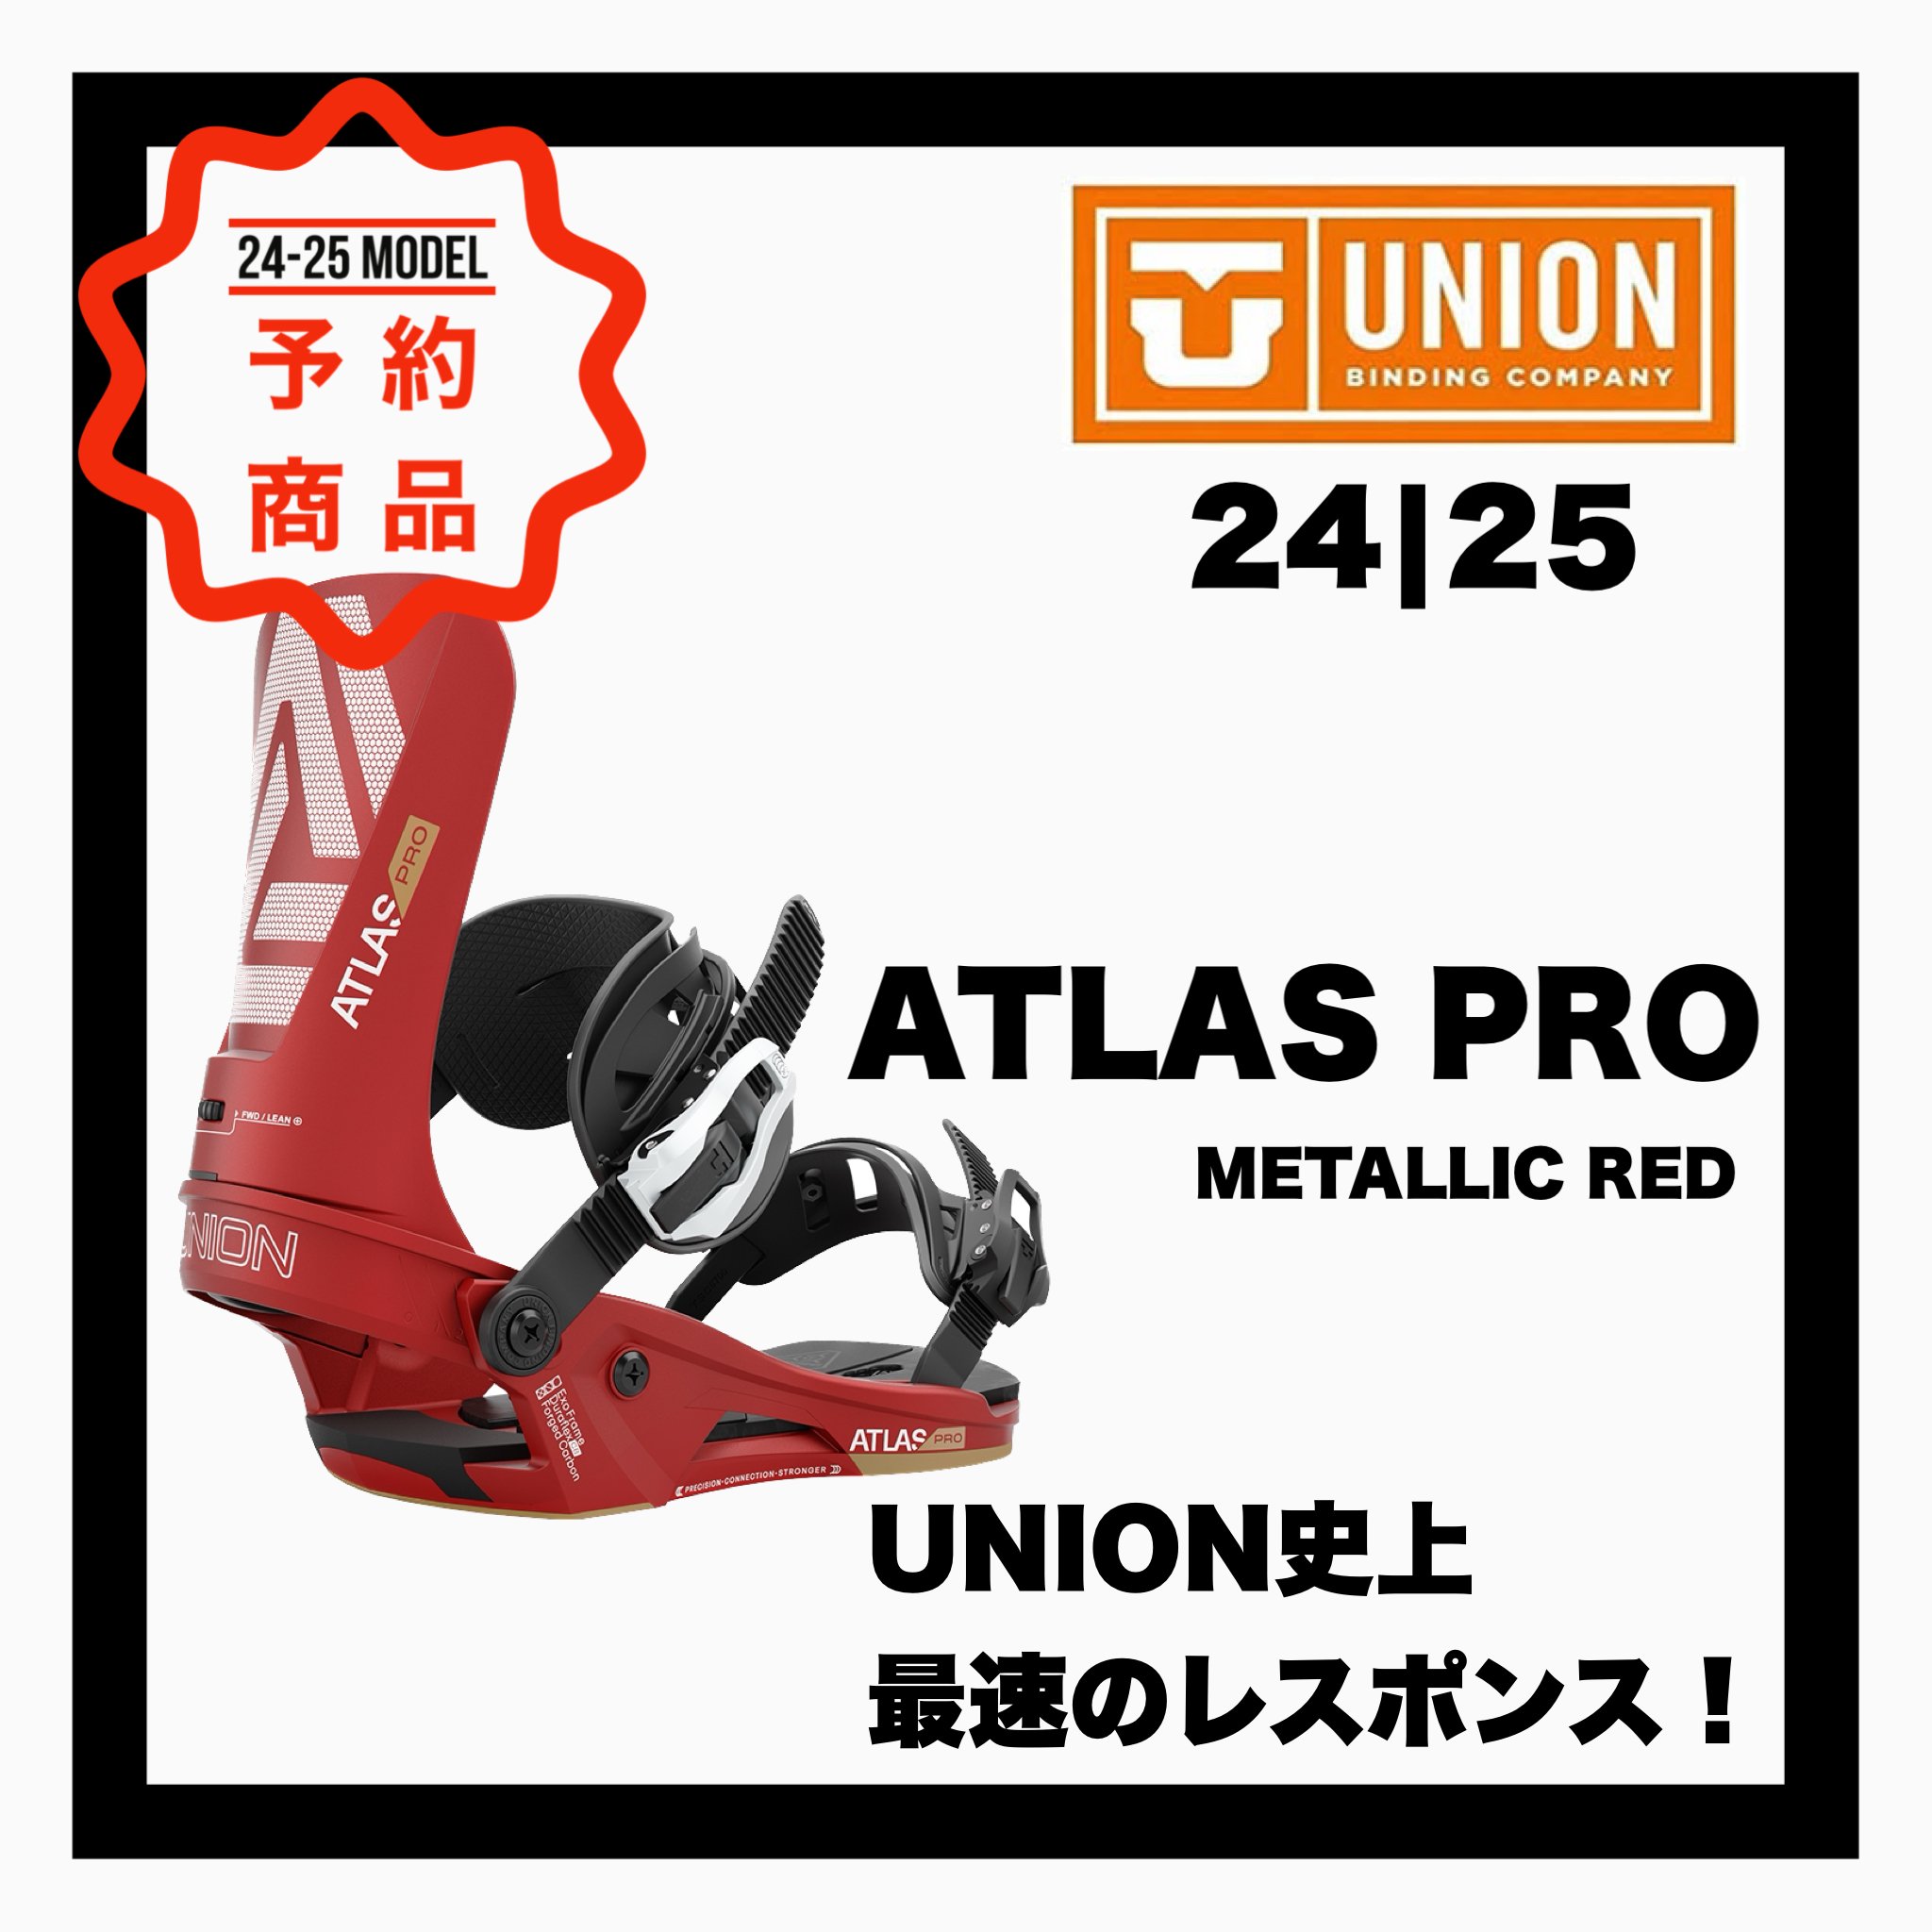 2024-2025 UNION 【 ATLAS PRO METALLIC RED 】 - JOINT HOUSE